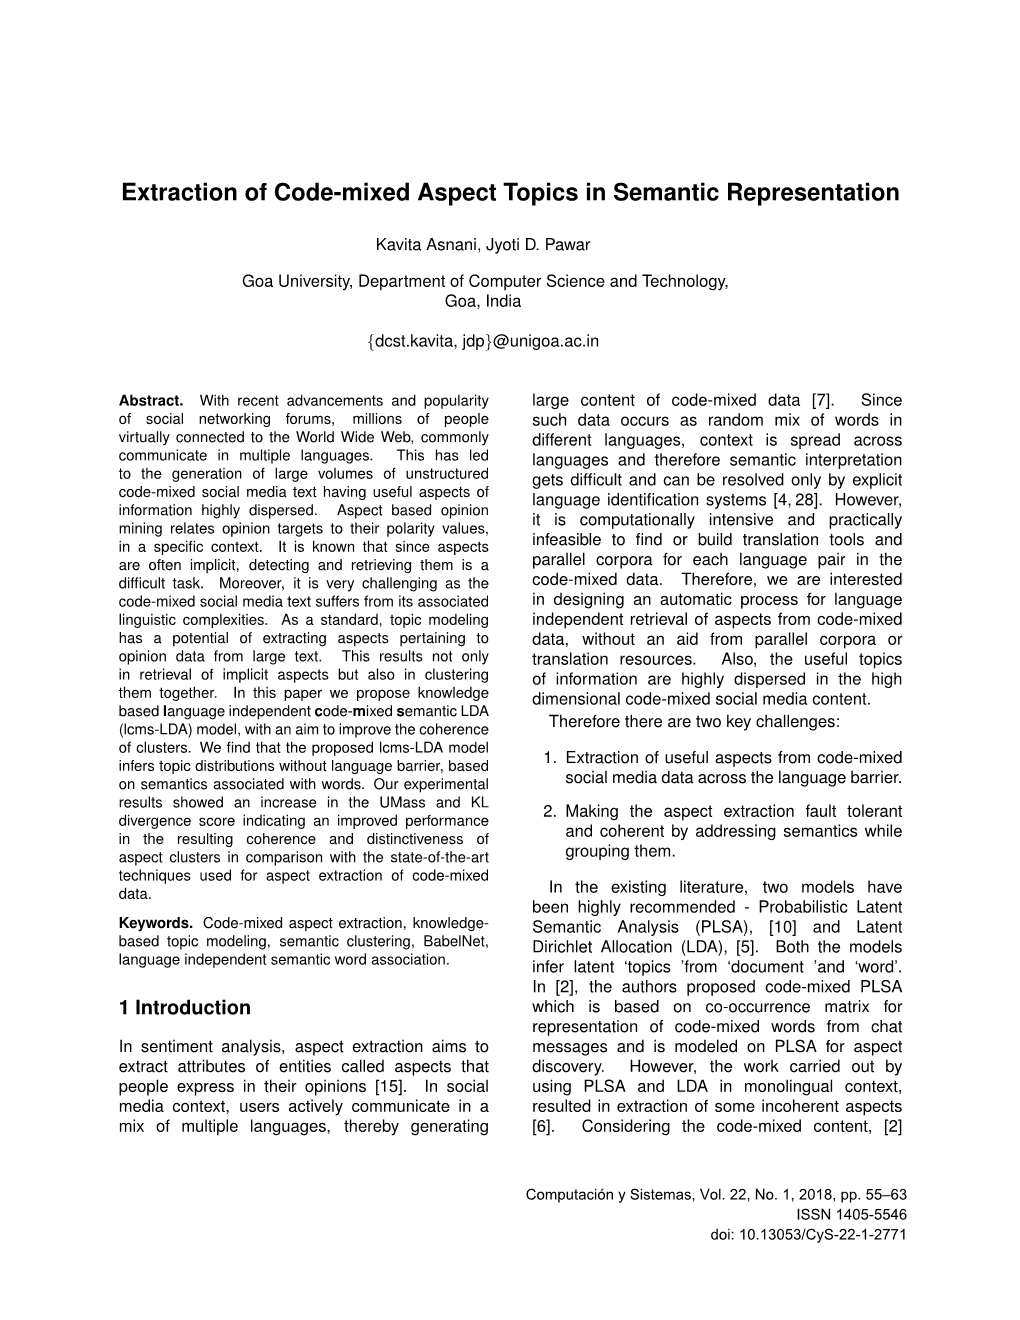 Extraction of Code-Mixed Aspect Topics in Semantic Representation